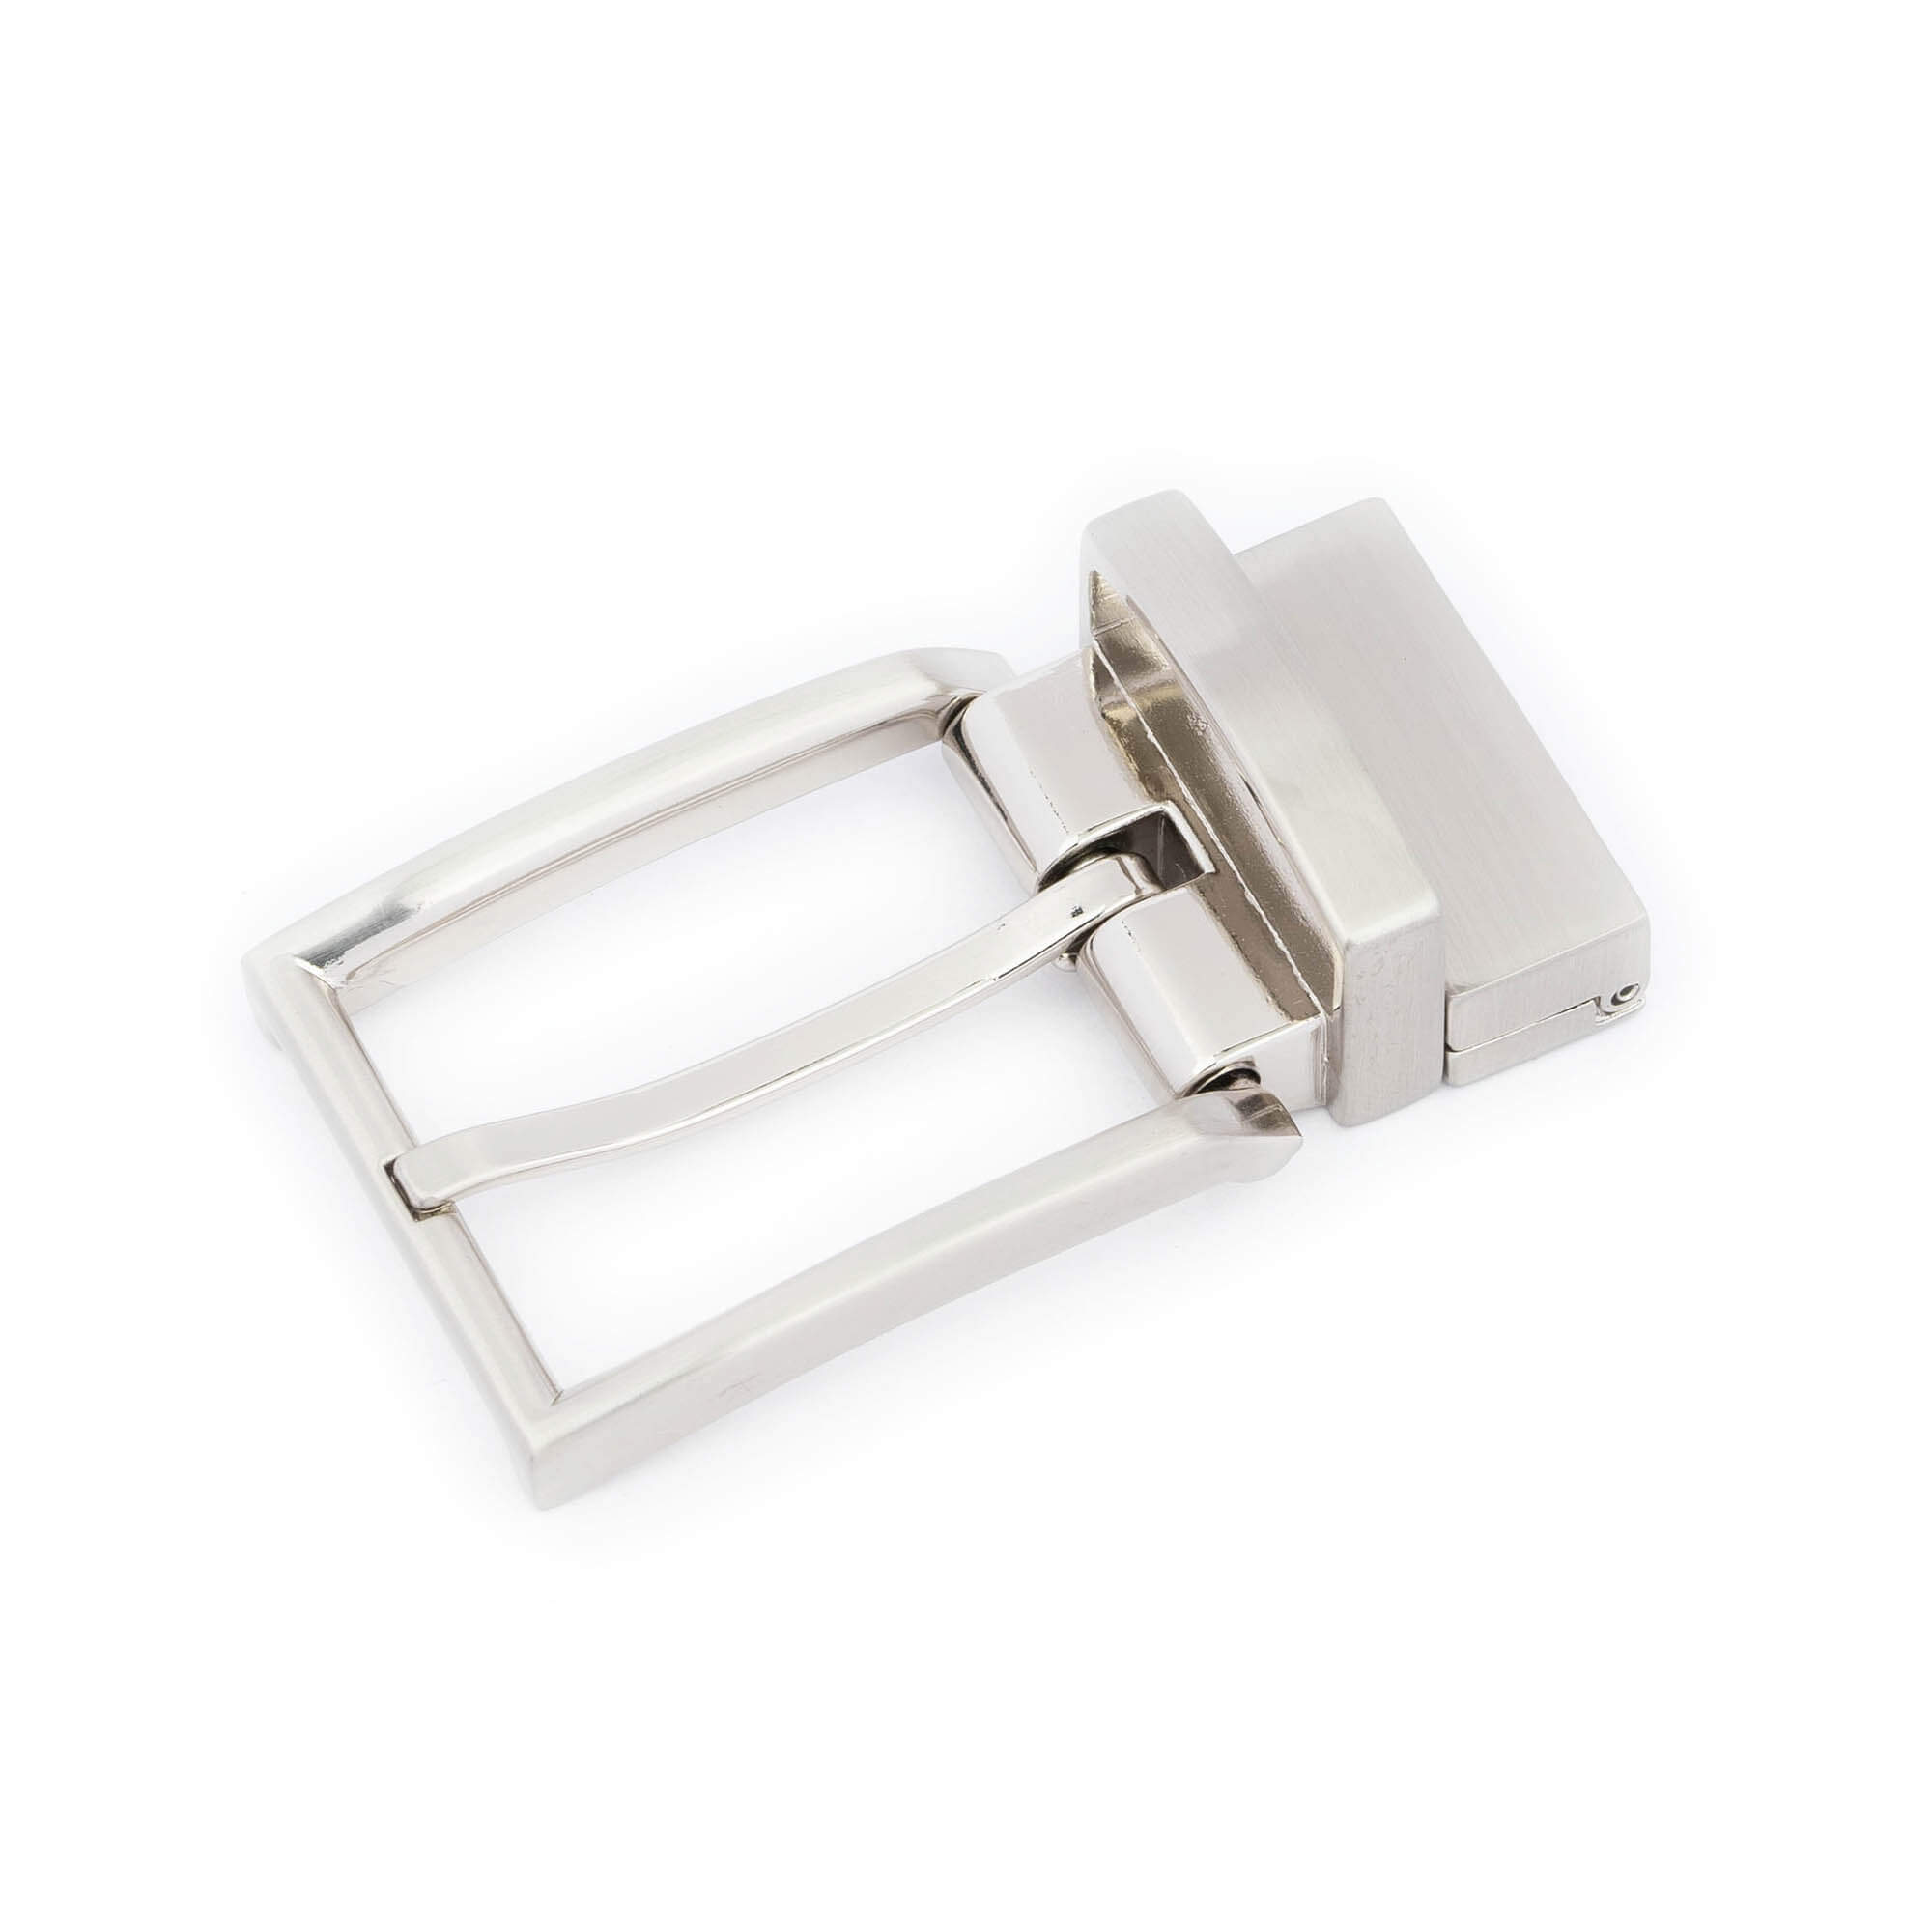 1 3/8 inch (35 mm) Nickel Free Reversible Clamp Belt Buckle Silver